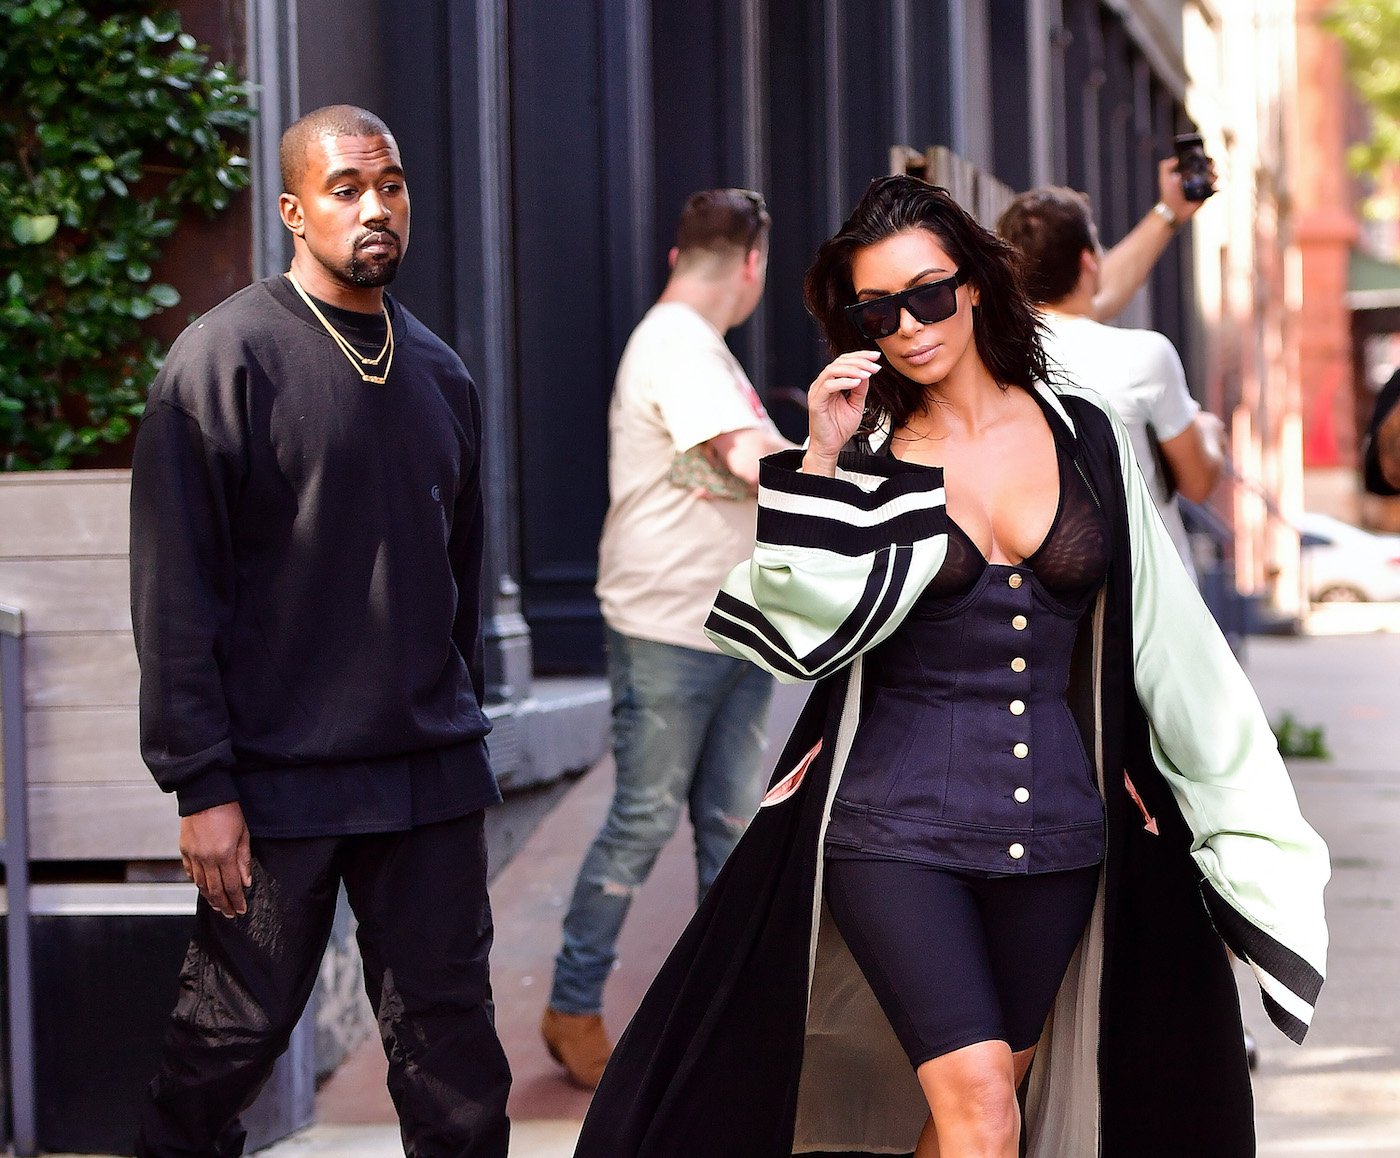 Kanye West and Kim Kardashian walk down the street in New York while fans take photos